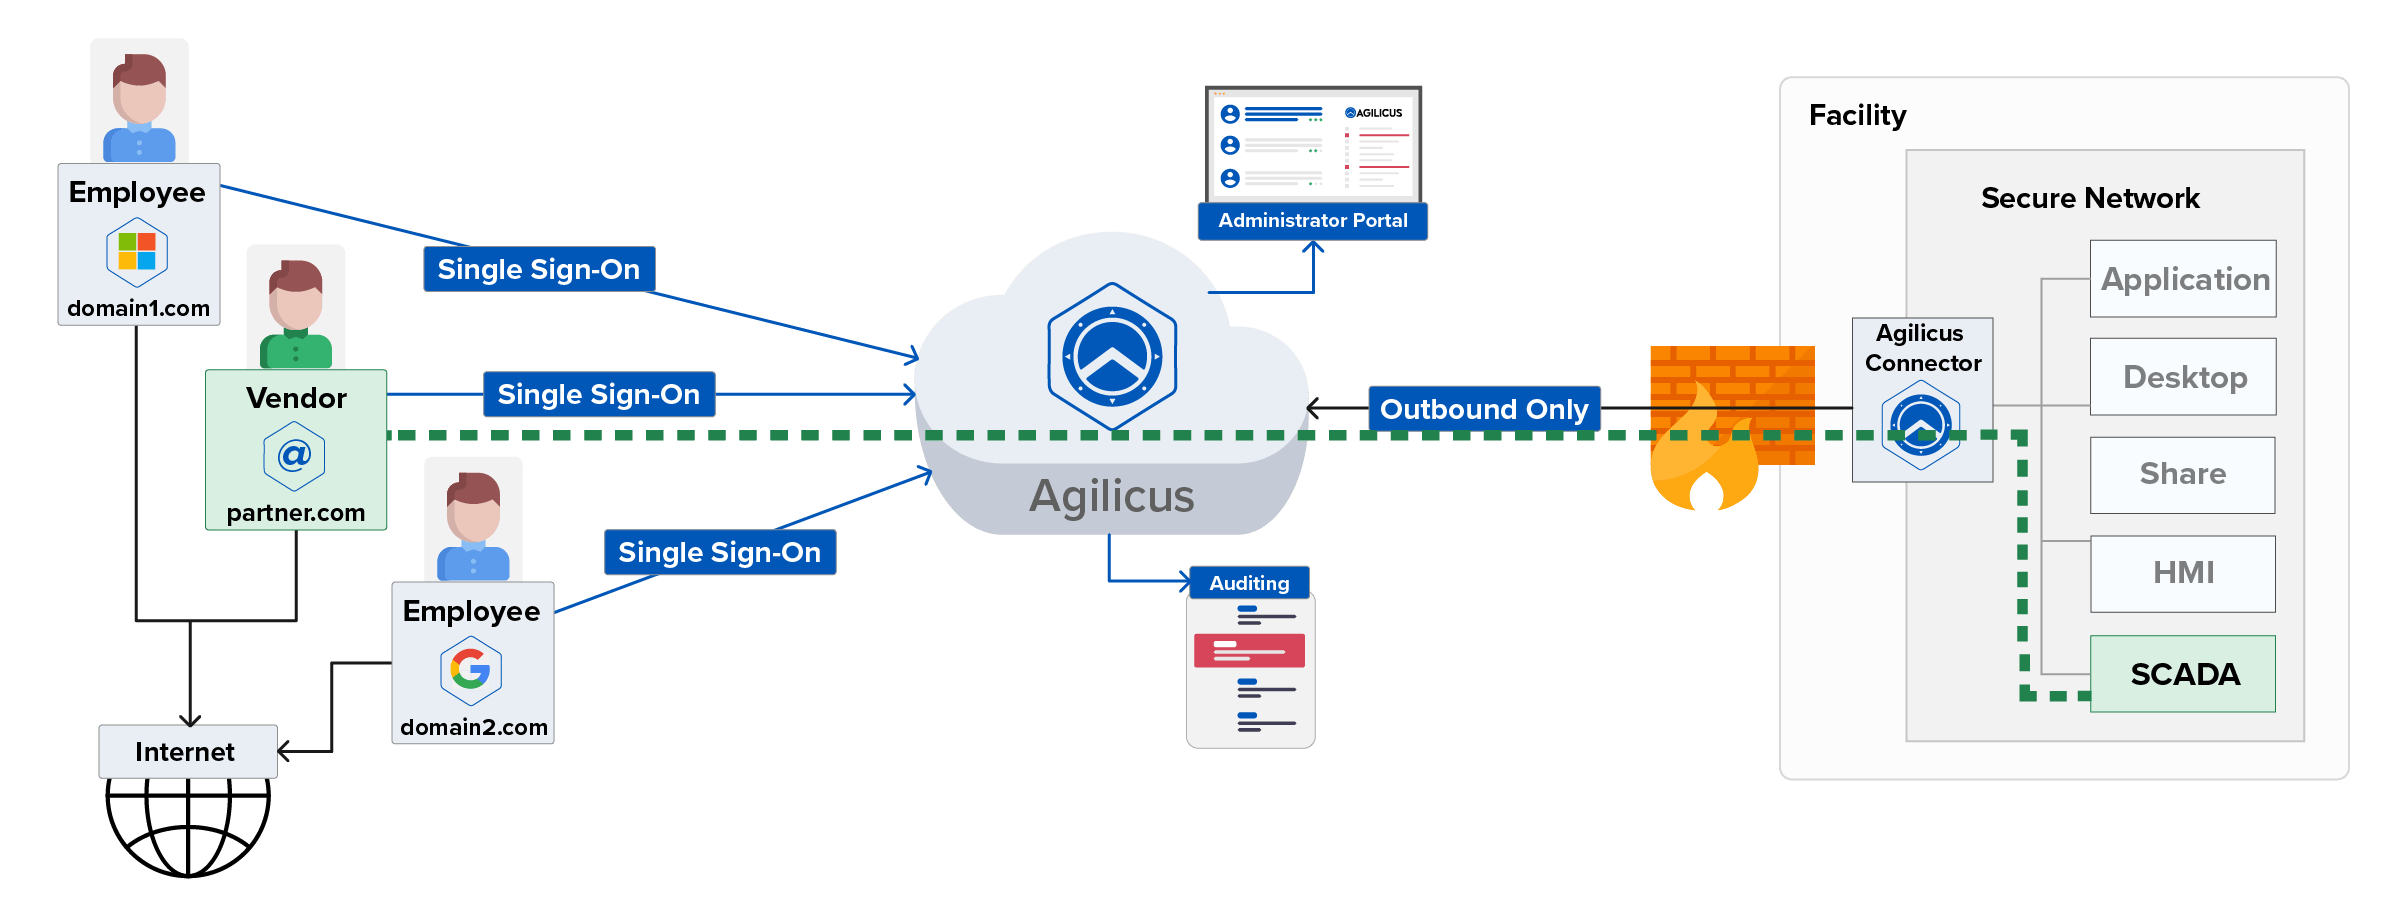 zero-trust-network-access-diagram-agilicus-anyx